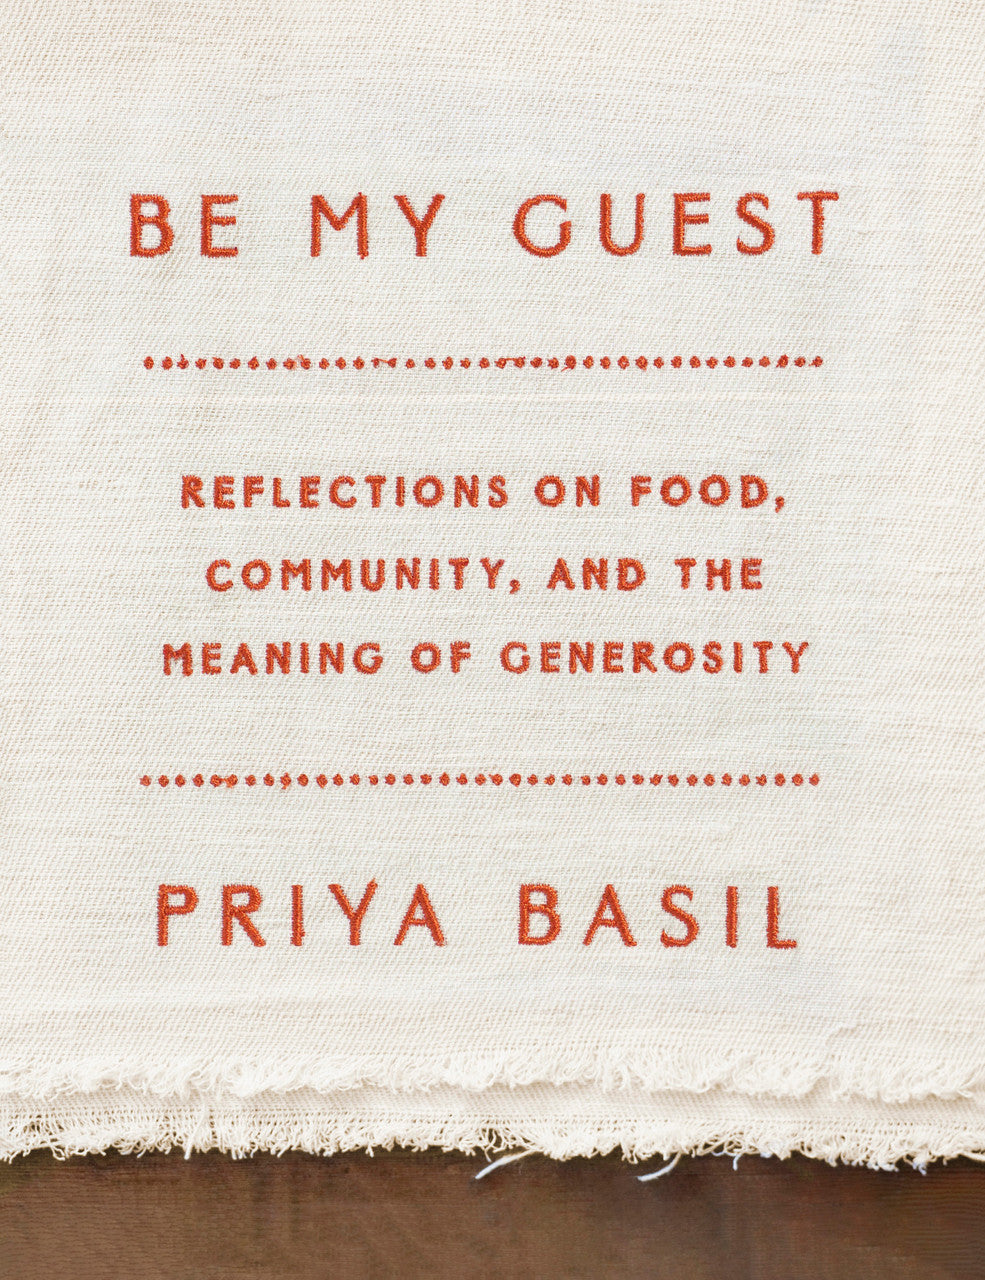 Be My Guest: Reflections on Food, Community, and the Meaning of Generosity ร้านหนังสือและสิ่งของ เป็นร้านหนังสือภาษาอังกฤษหายาก และร้านกาแฟ หรือ บุ๊คคาเฟ่ ตั้งอยู่สุขุมวิท กรุงเทพ